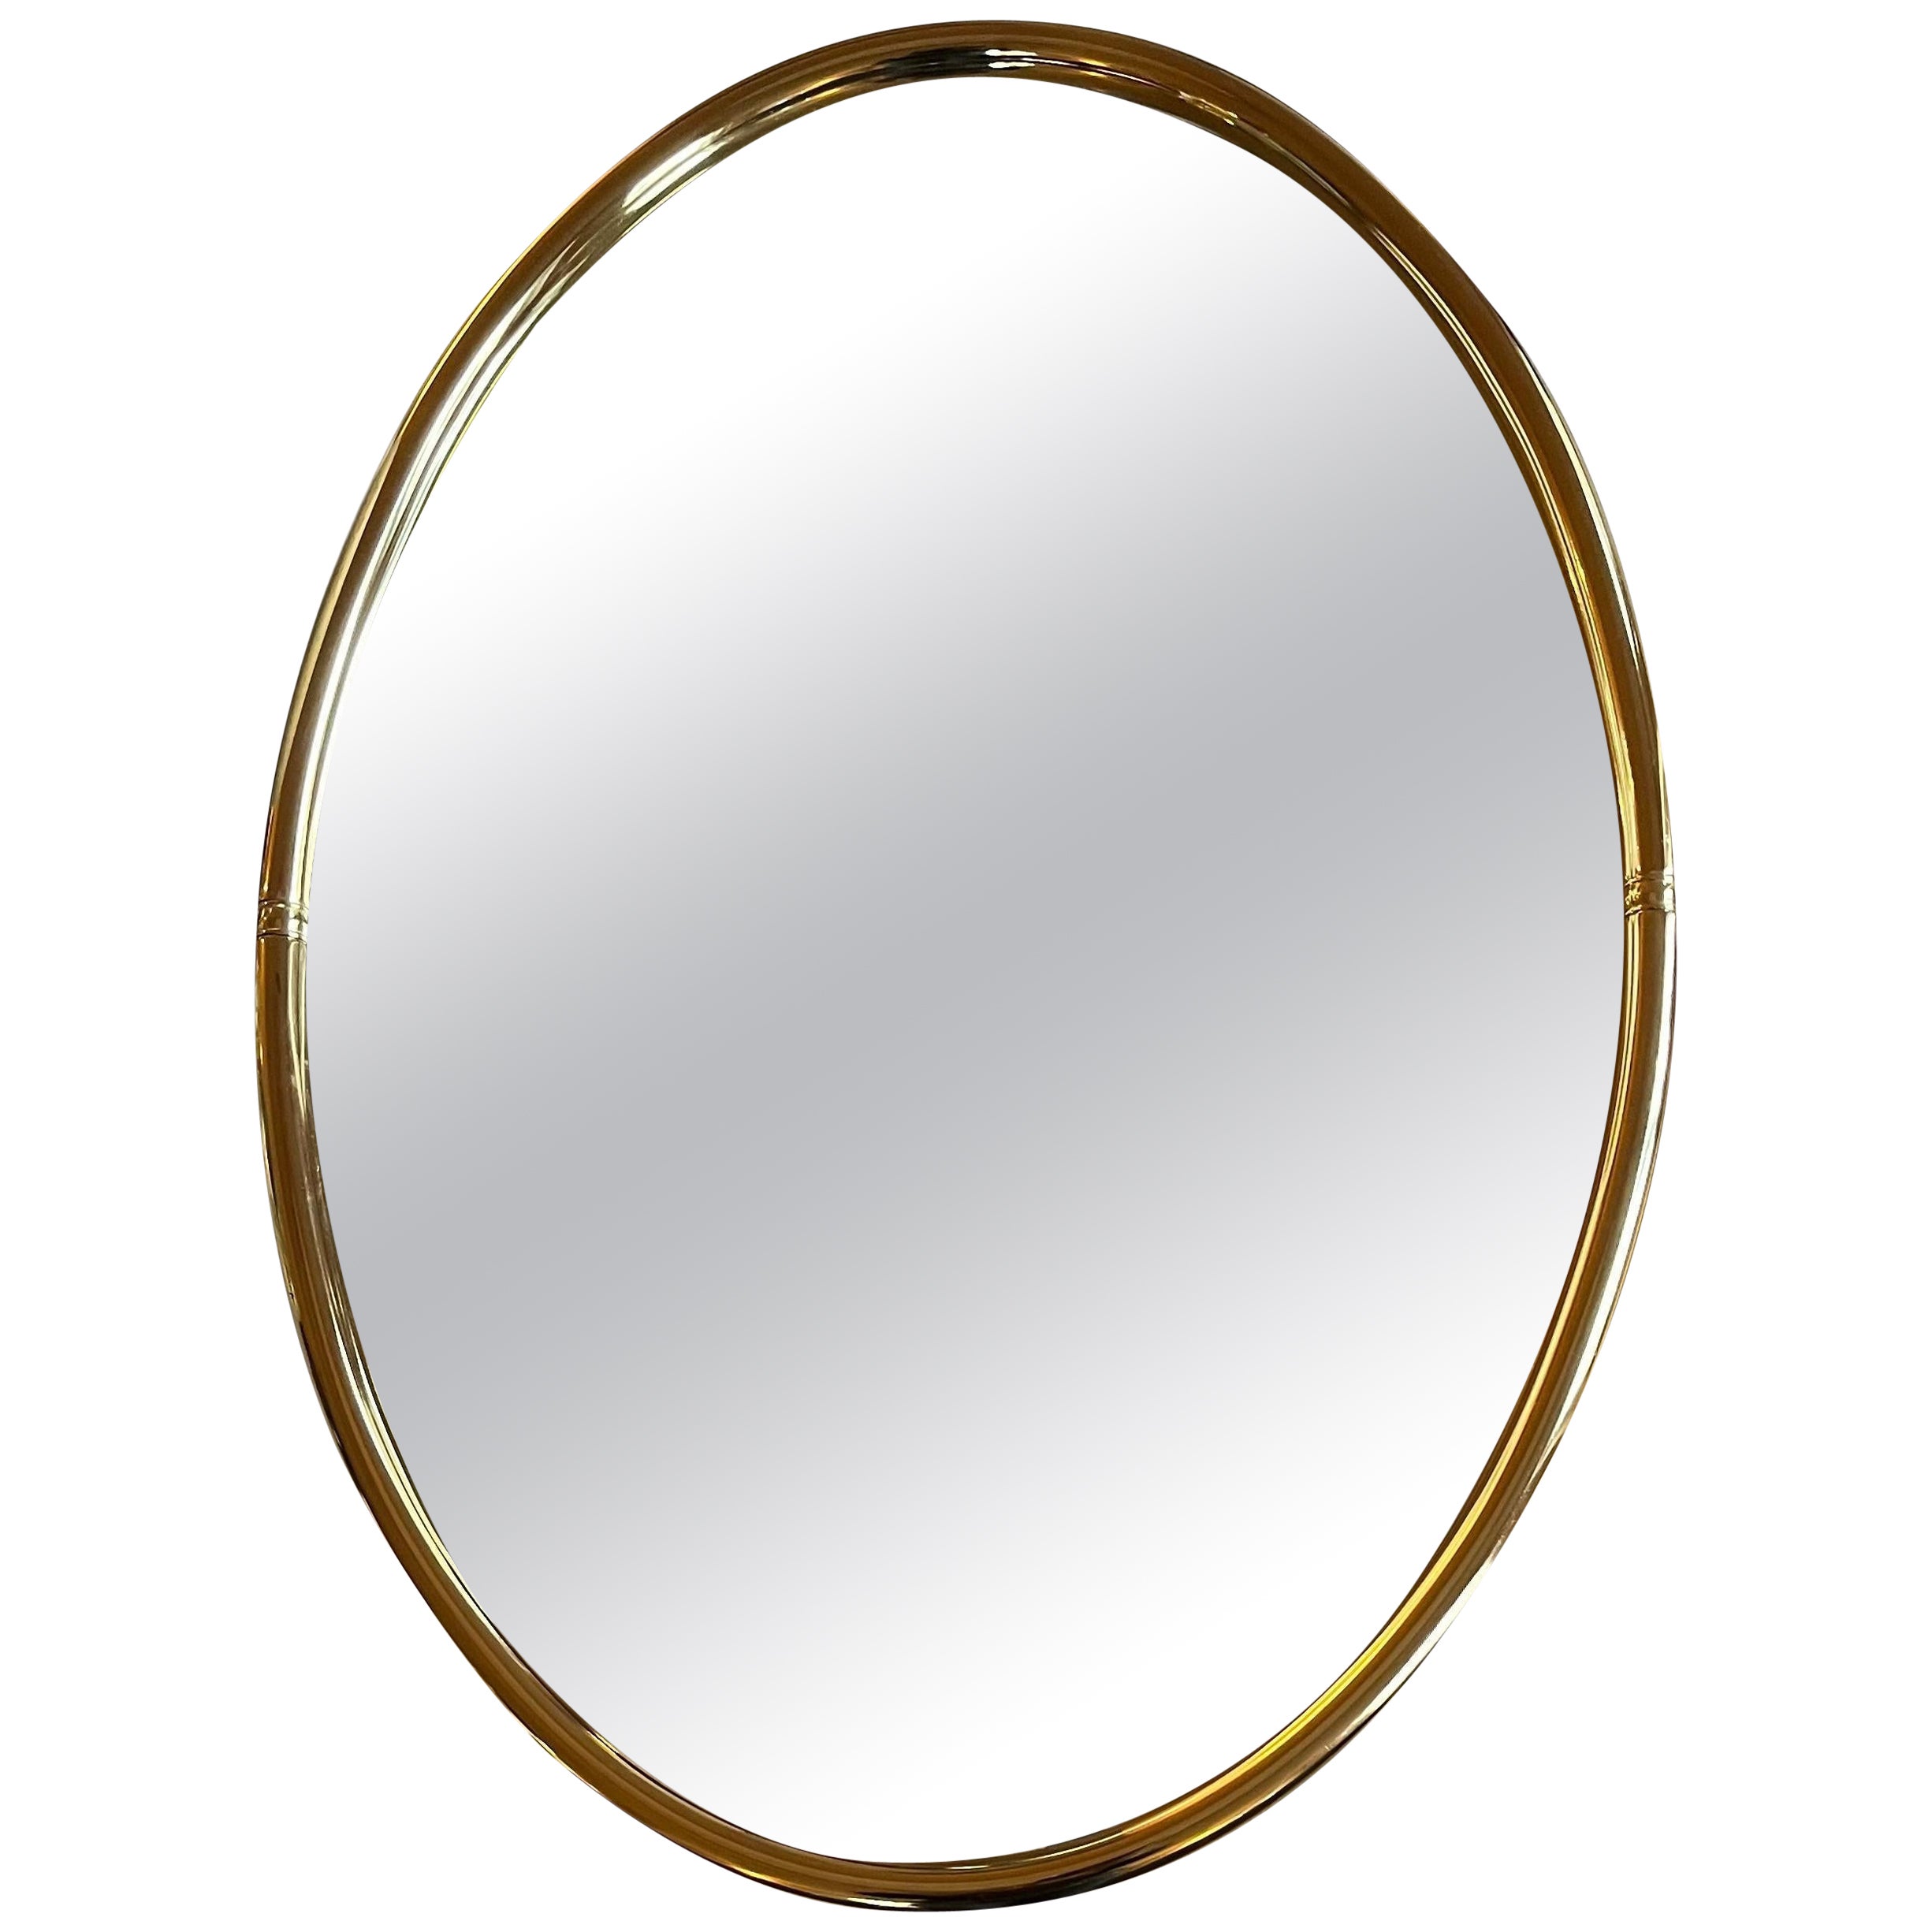 Petit miroir ovale en métal doré